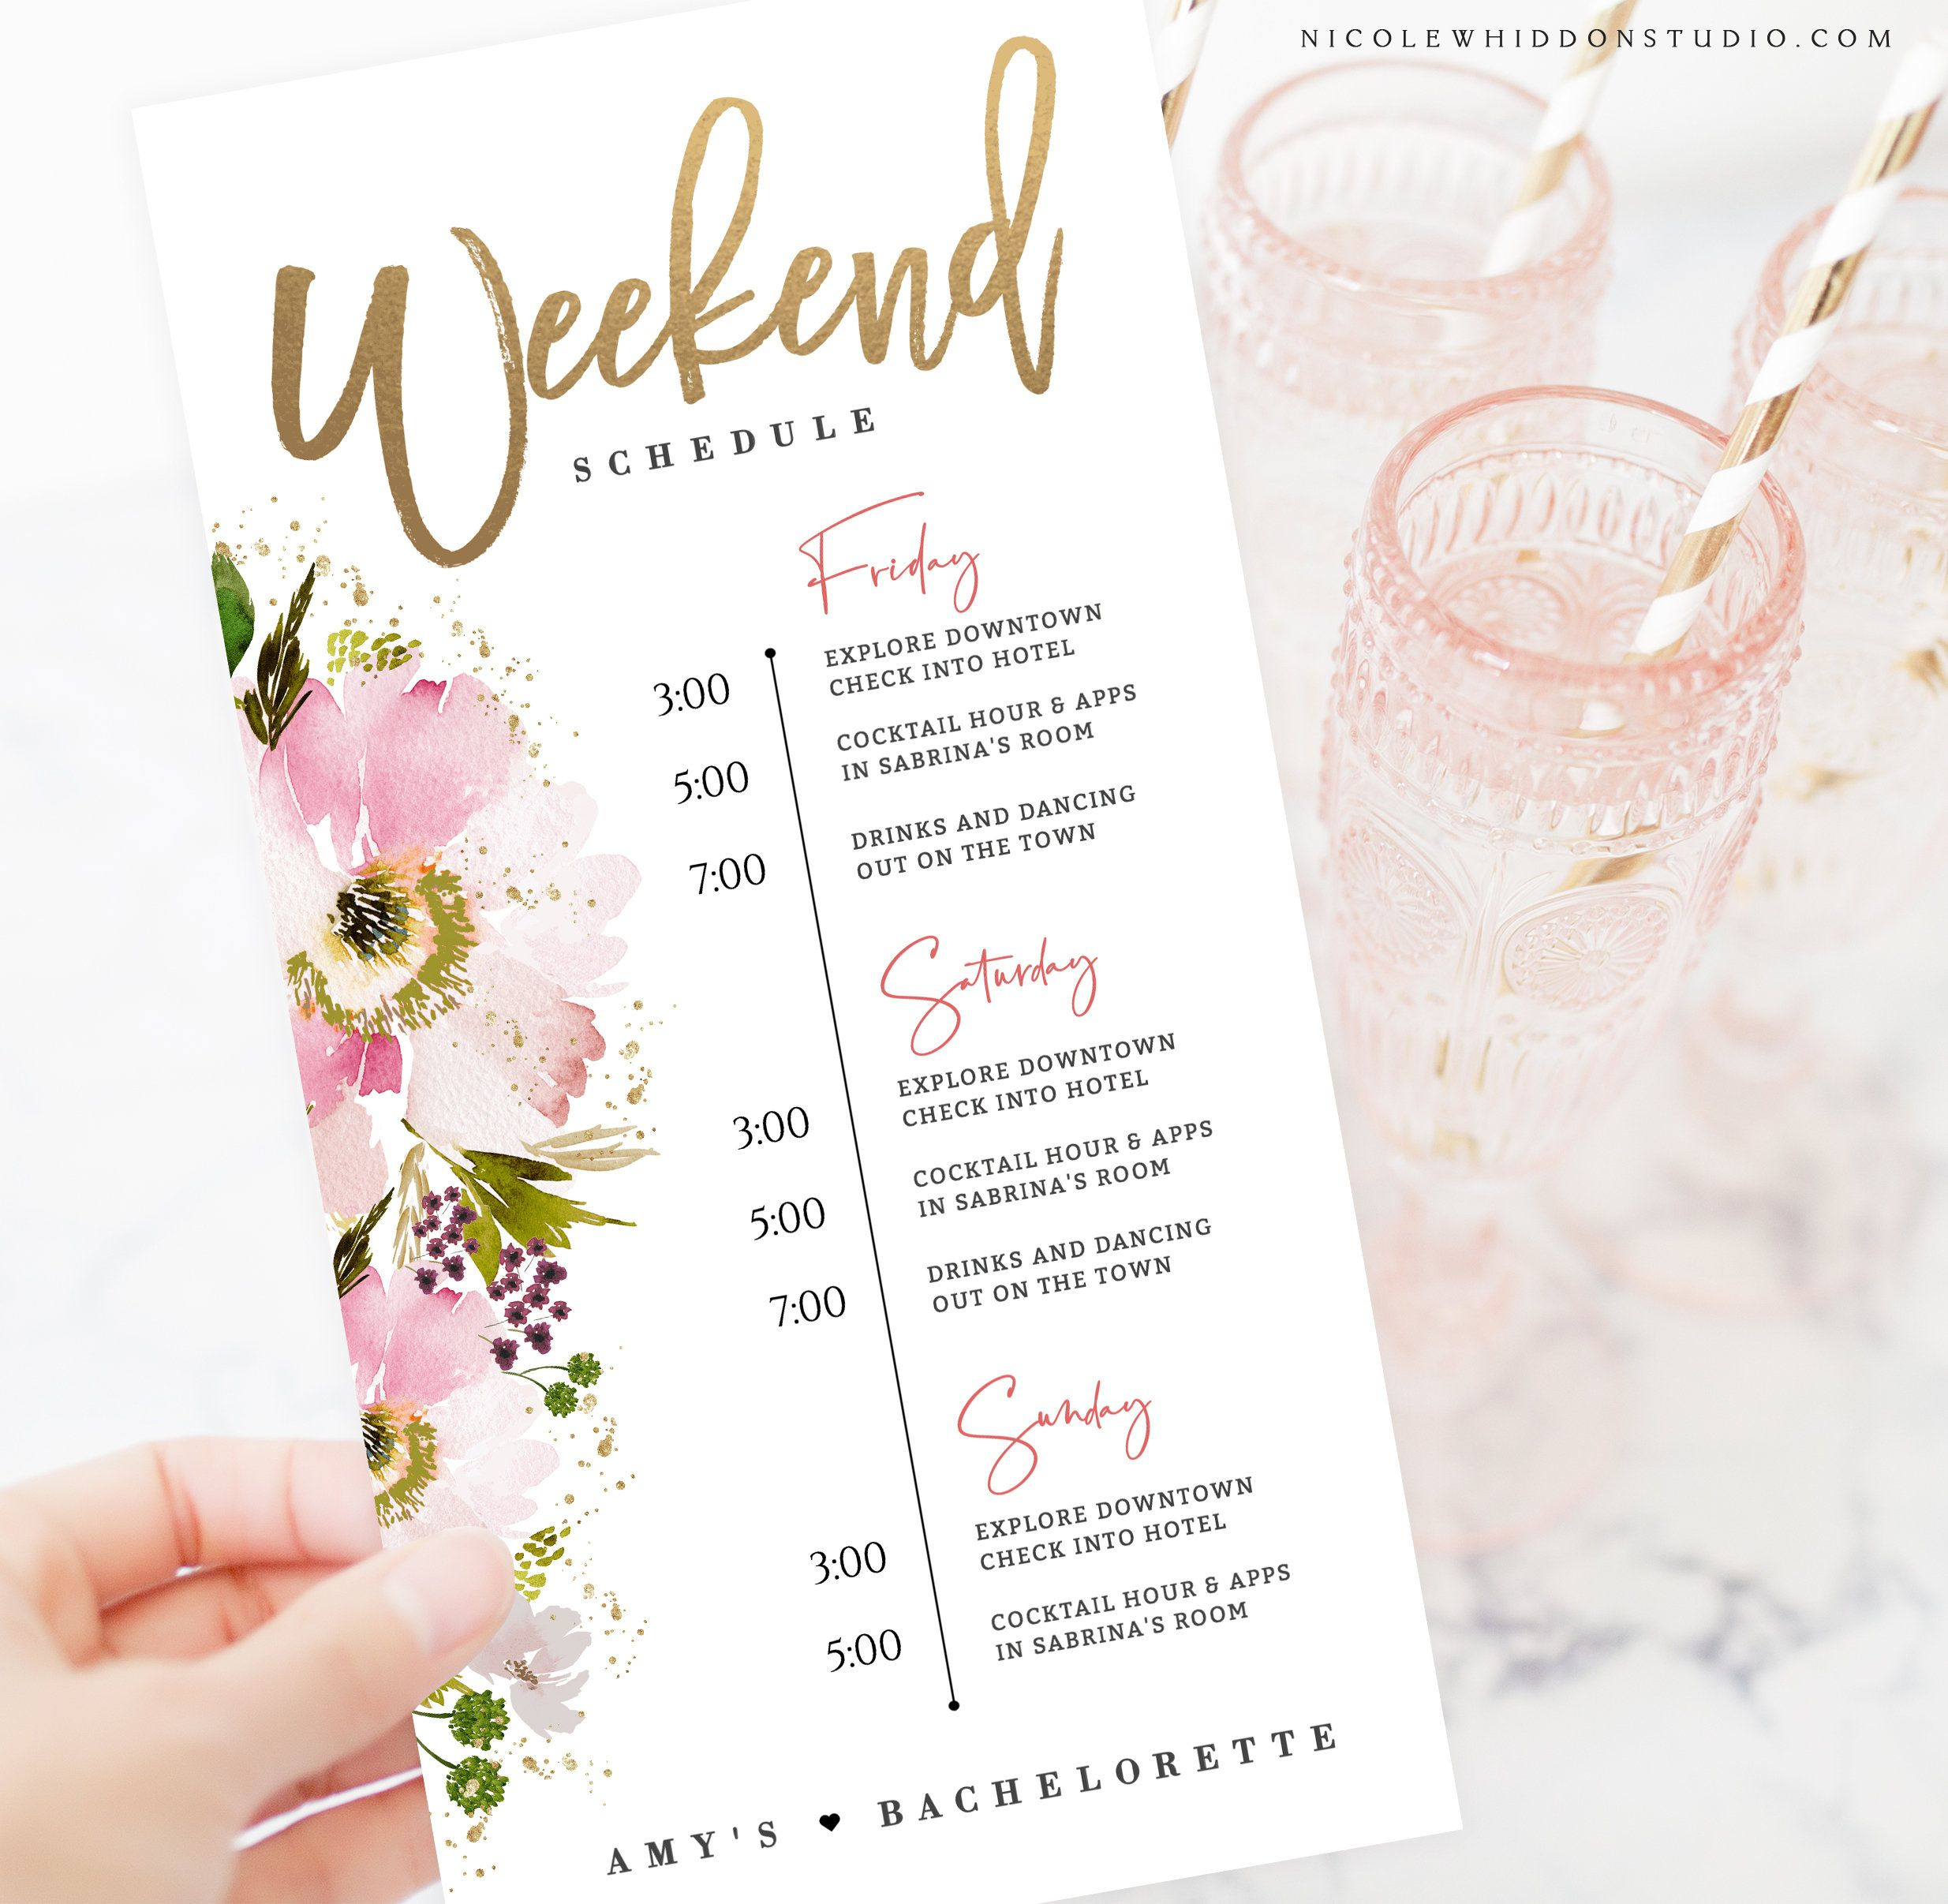 Bachelorette Weekend Itinerary Editable Template Wedding with Bachelorette Weekend Itinerary Template